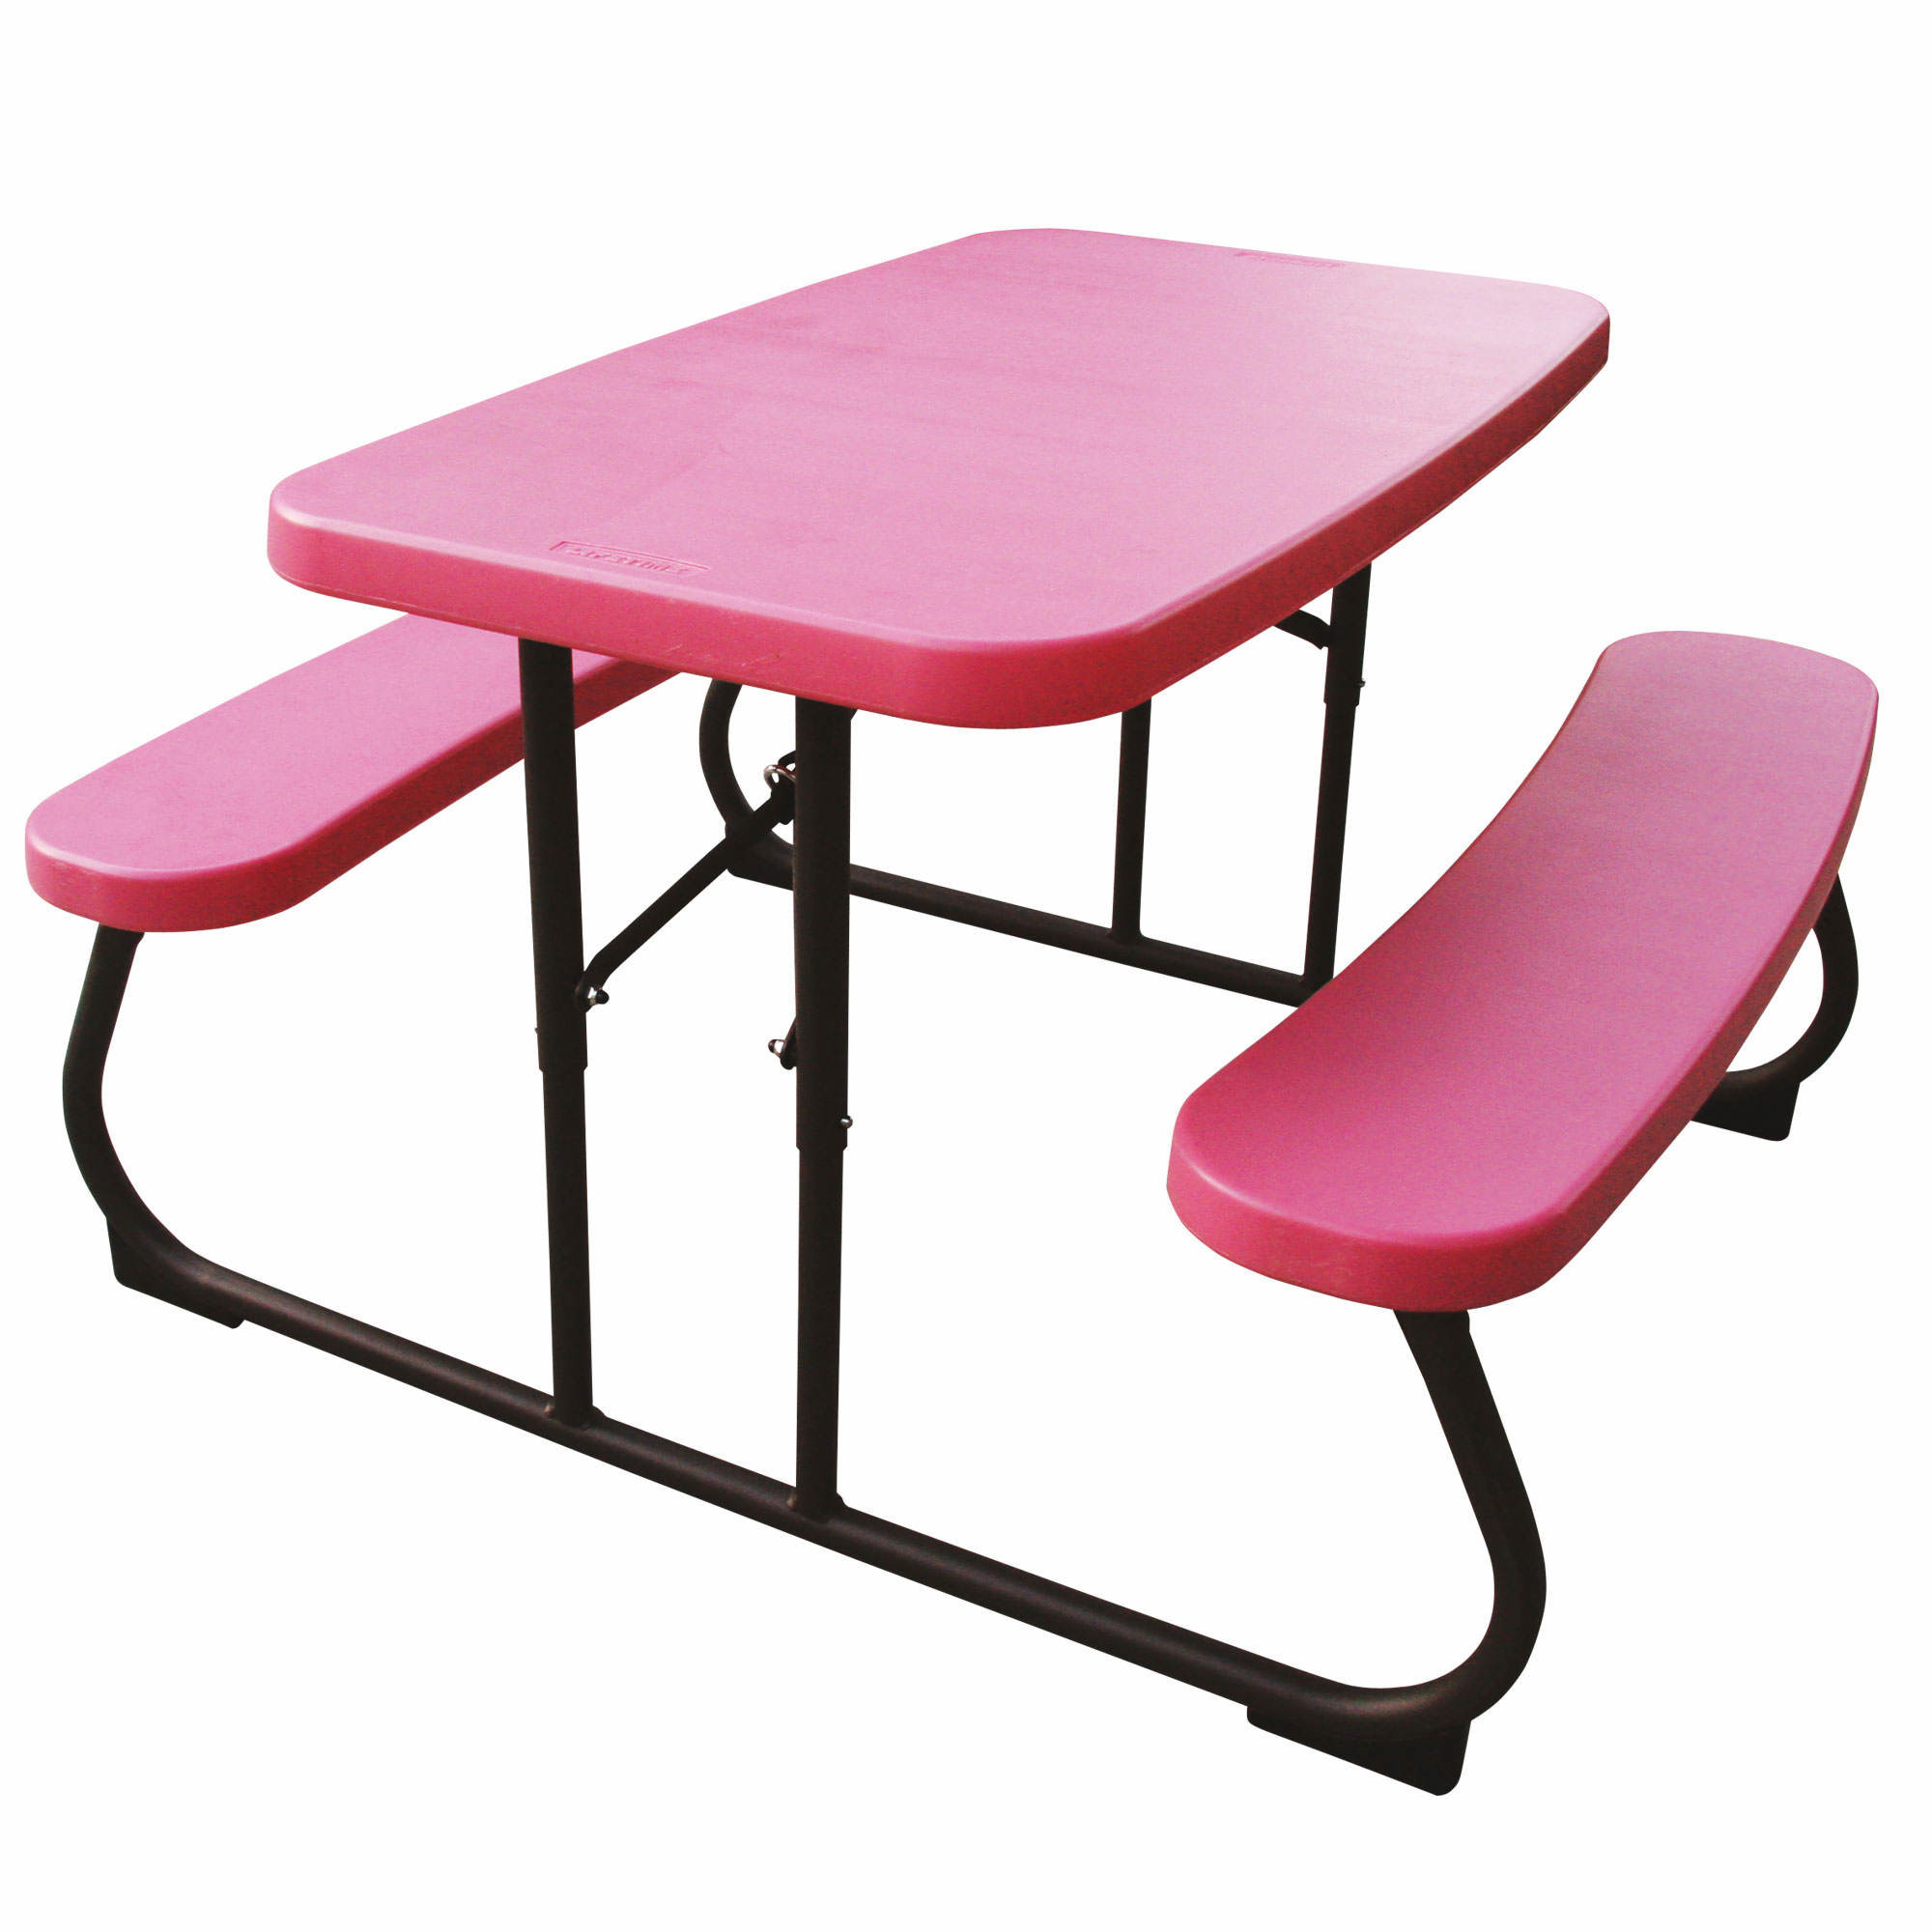 Picnic Table For Kids
 Lifetime Kids Picnic Table Pink Bronze BJ s Wholesale